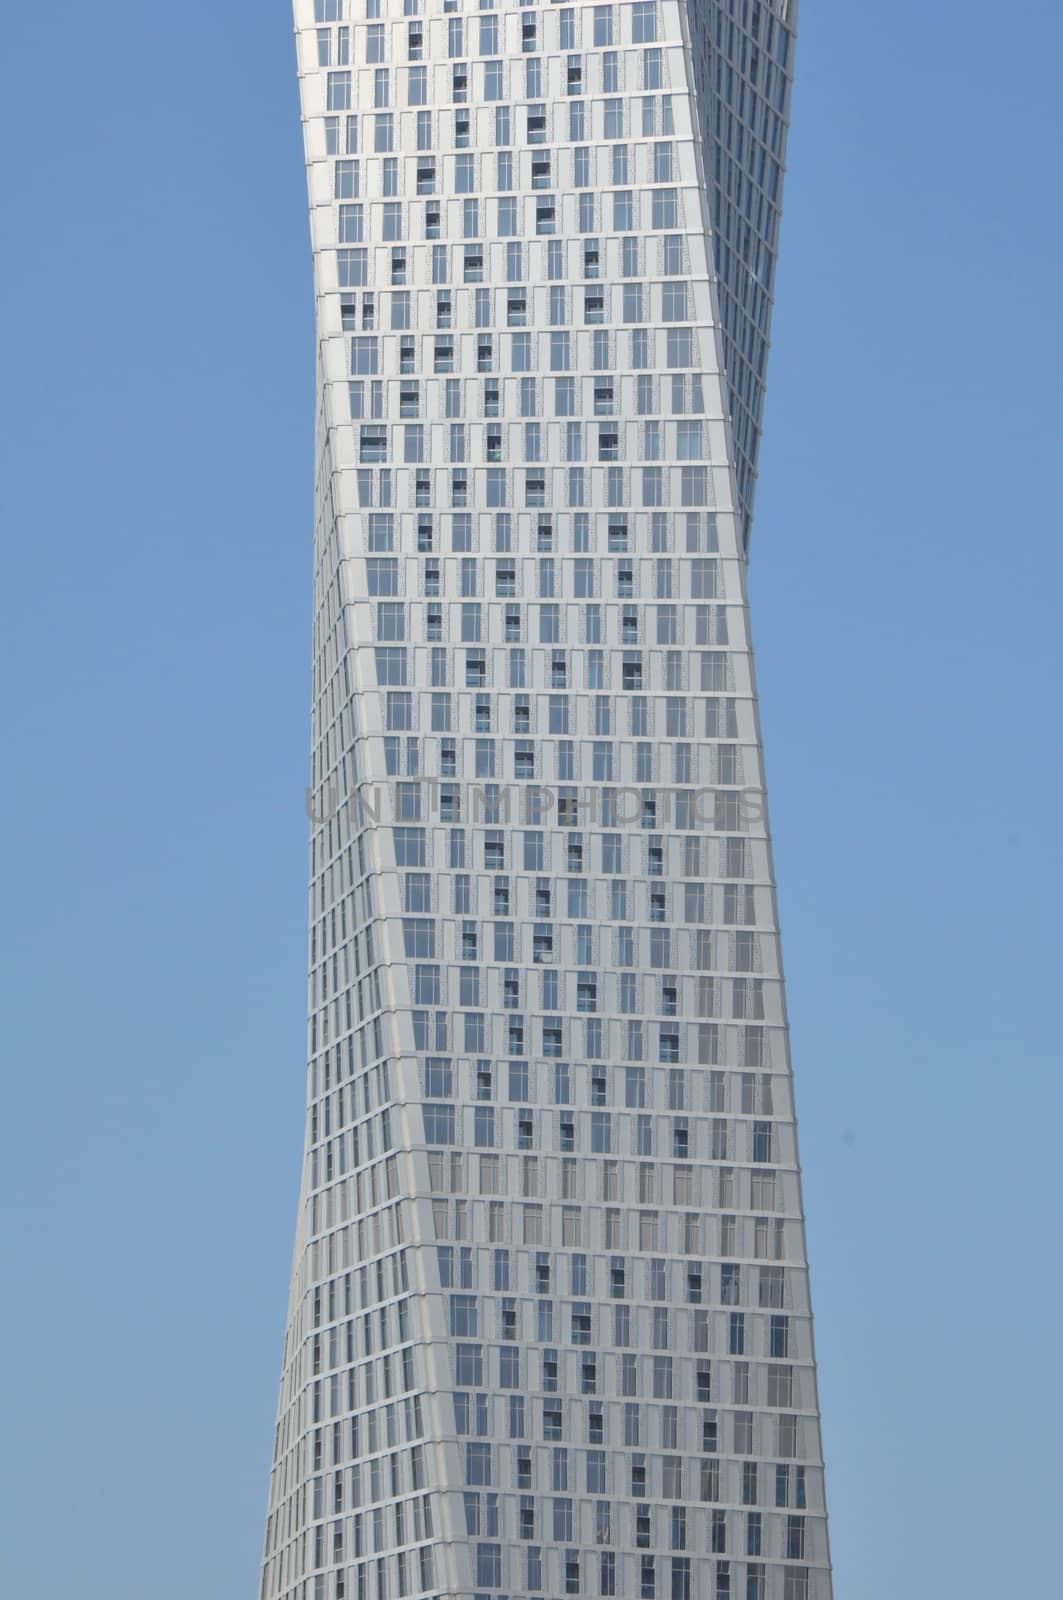 Cayan Tower at Dubai Marina in Dubai, UAE by sainaniritu